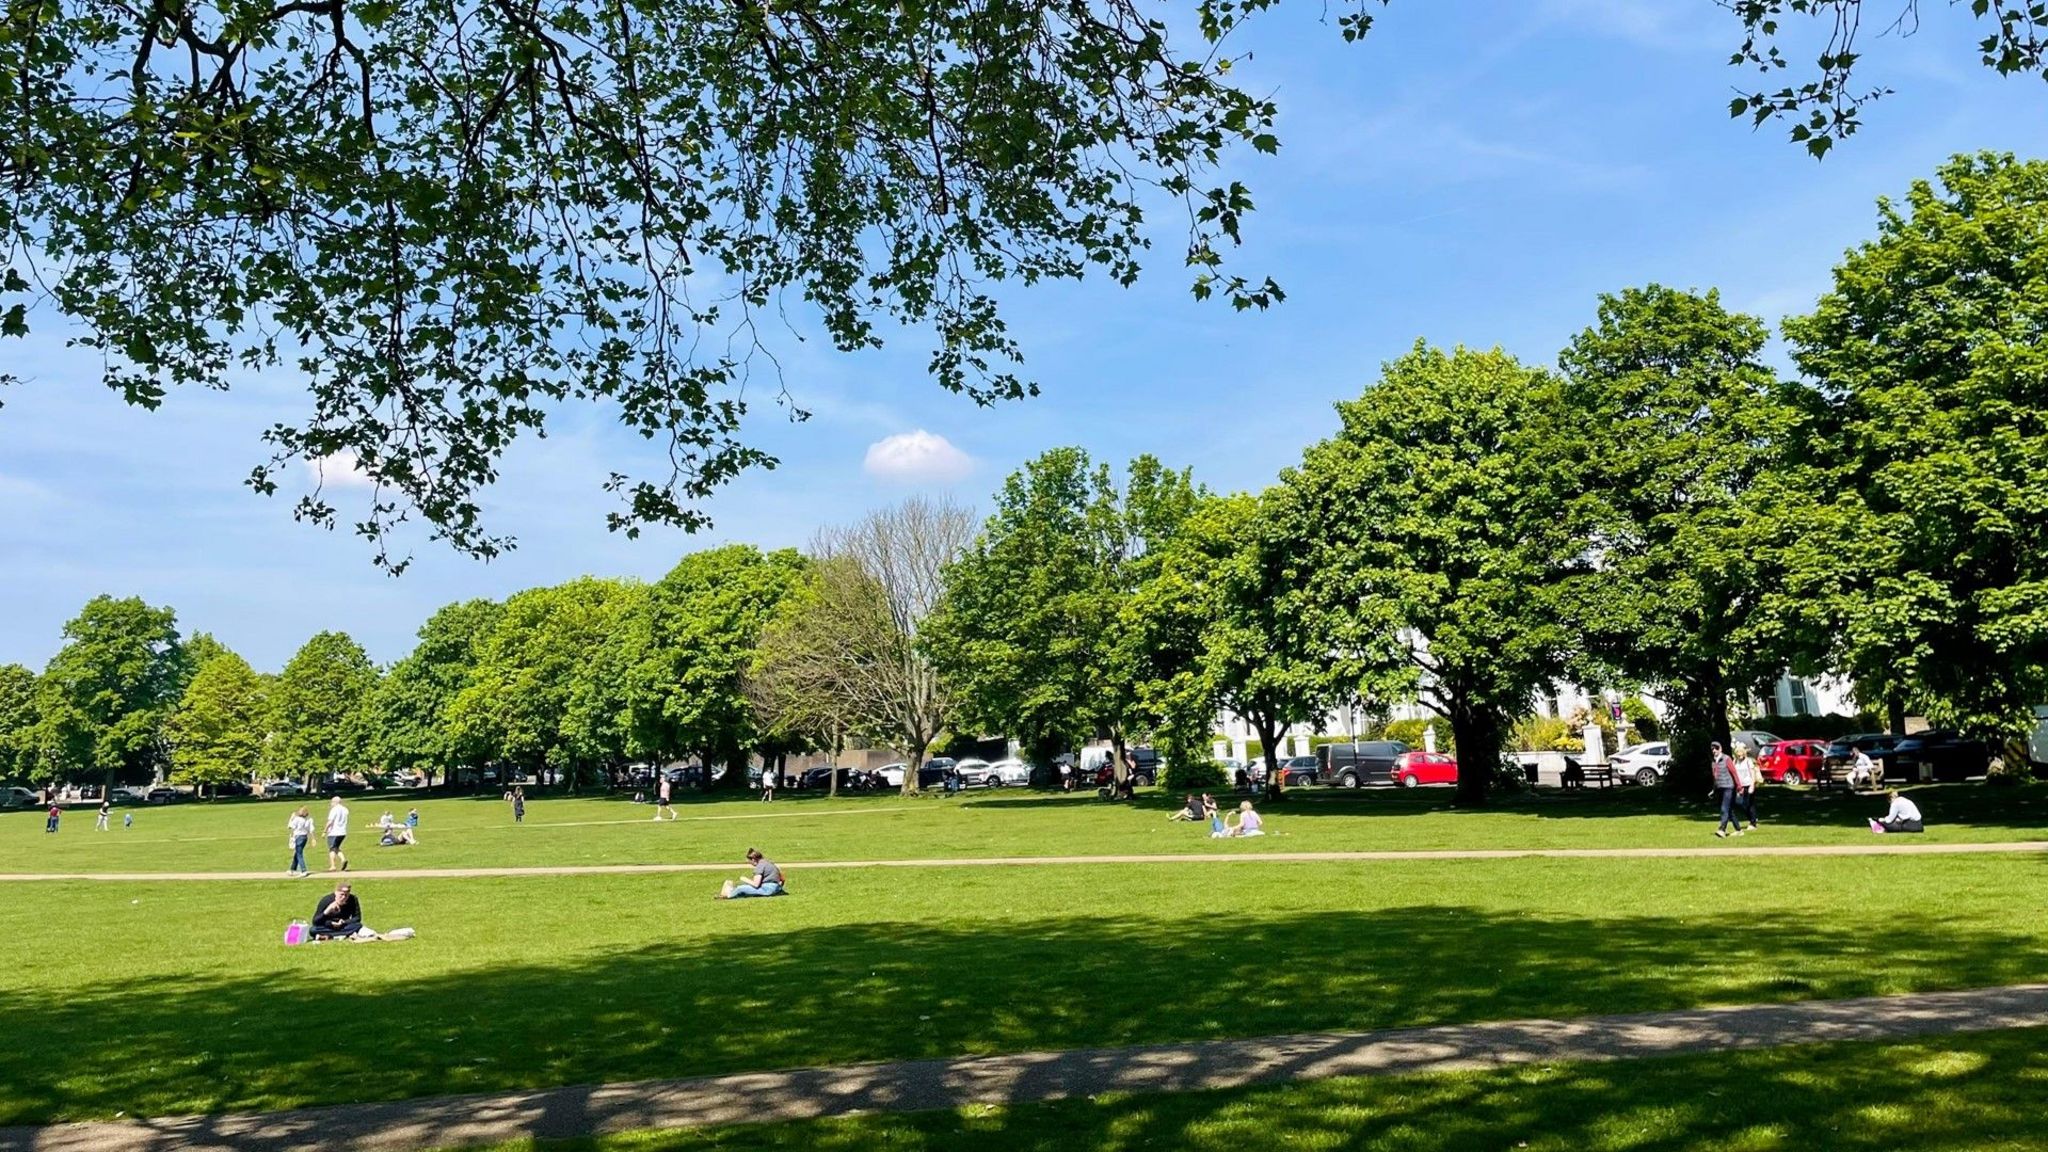 A sunny park scene with trees